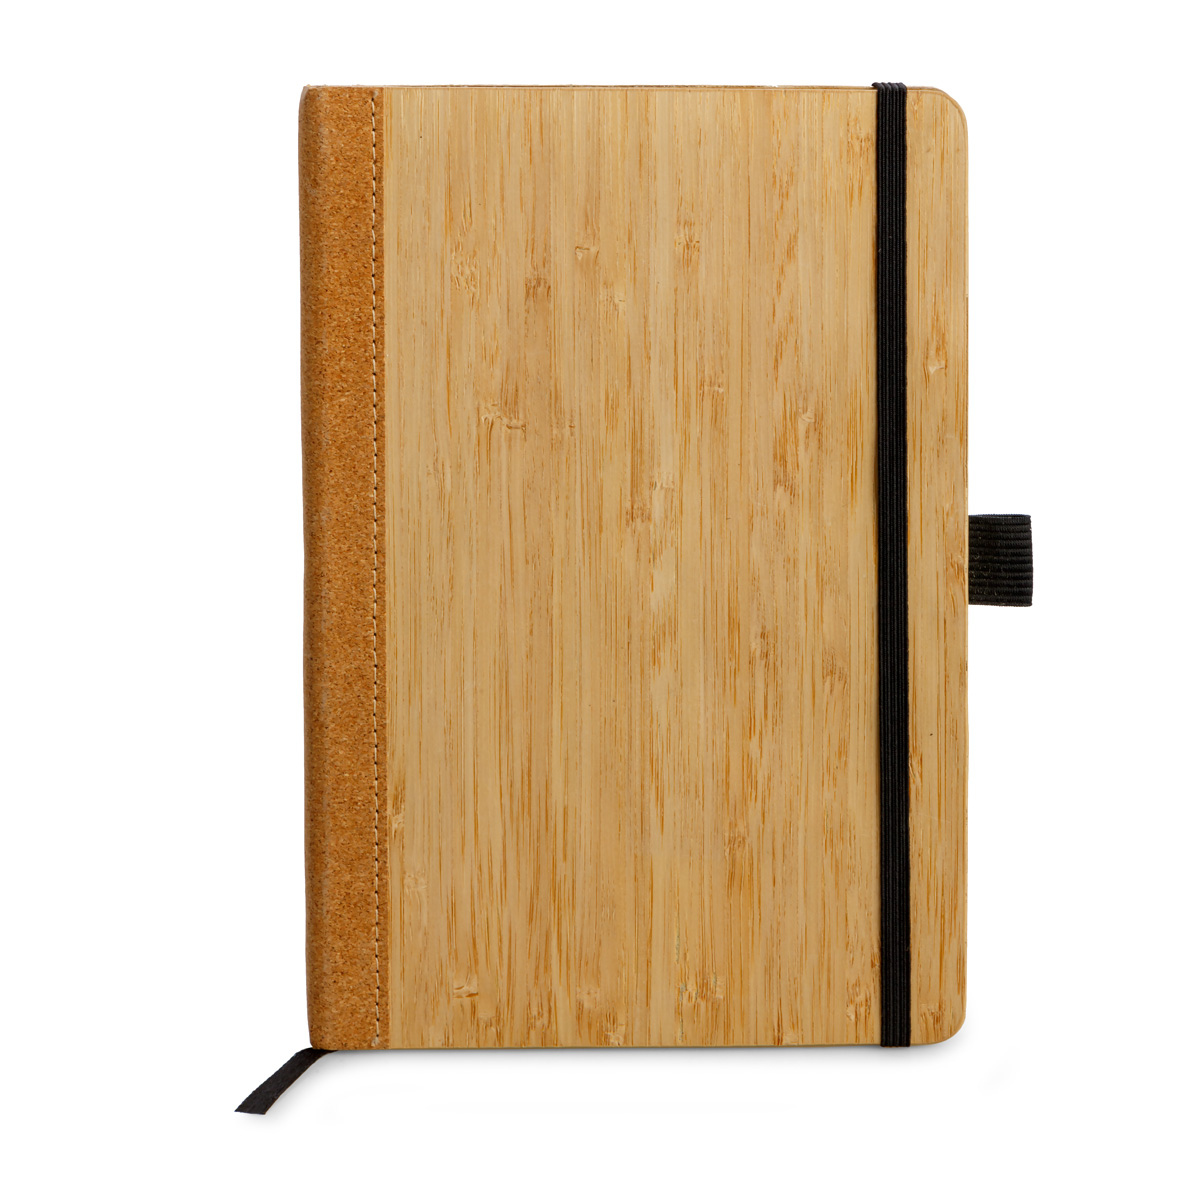 Raimok Bamboo & Cork Notebook Product Image